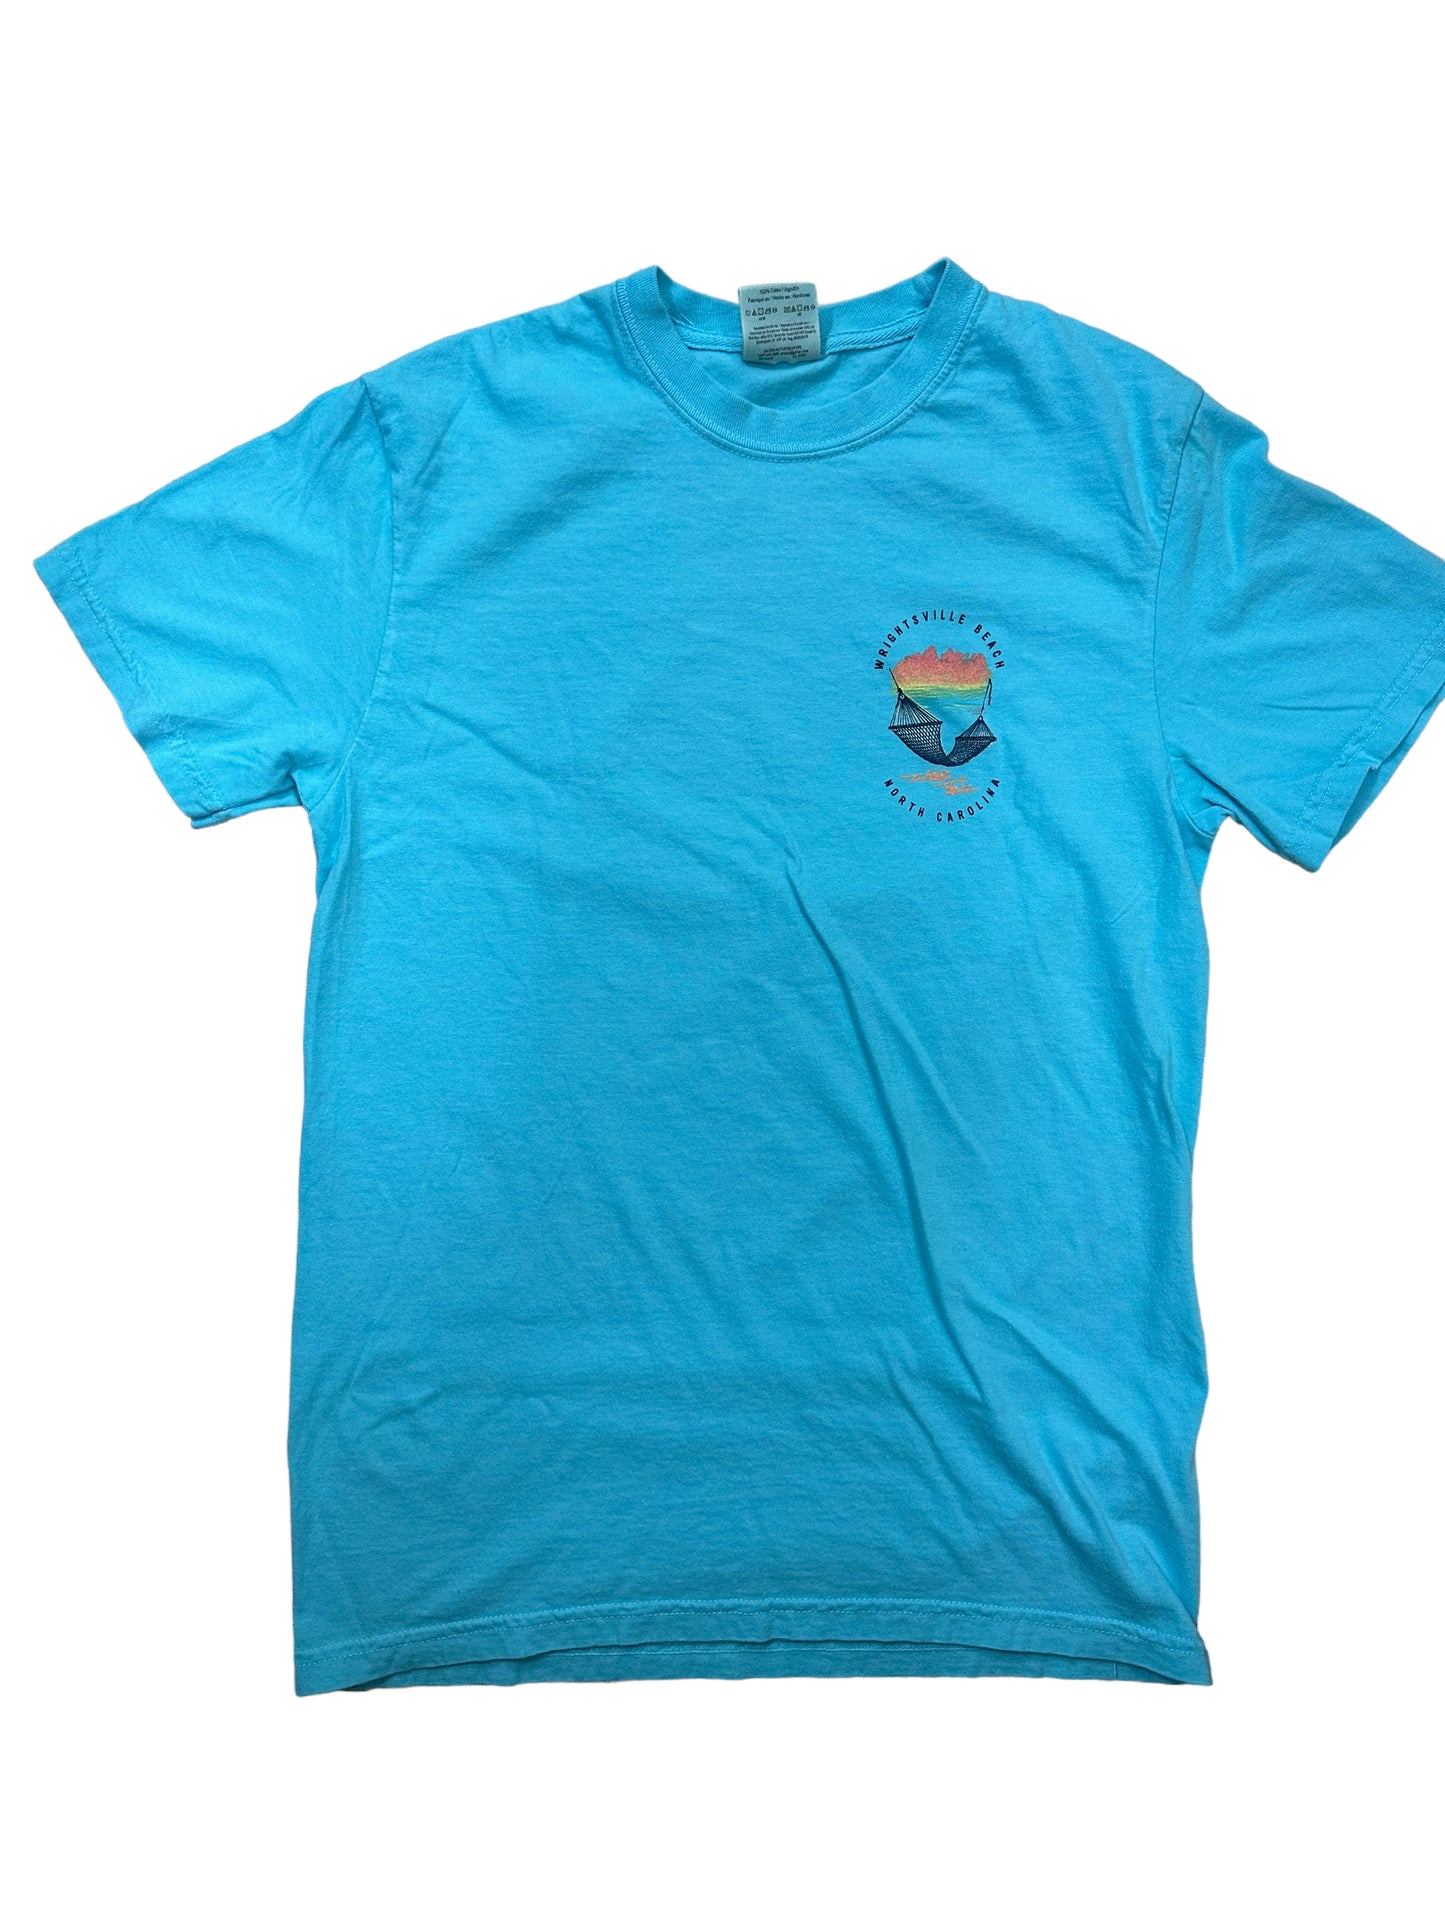 Wrightsville Beach Hammock  - T Shirt - Lagoon Blue